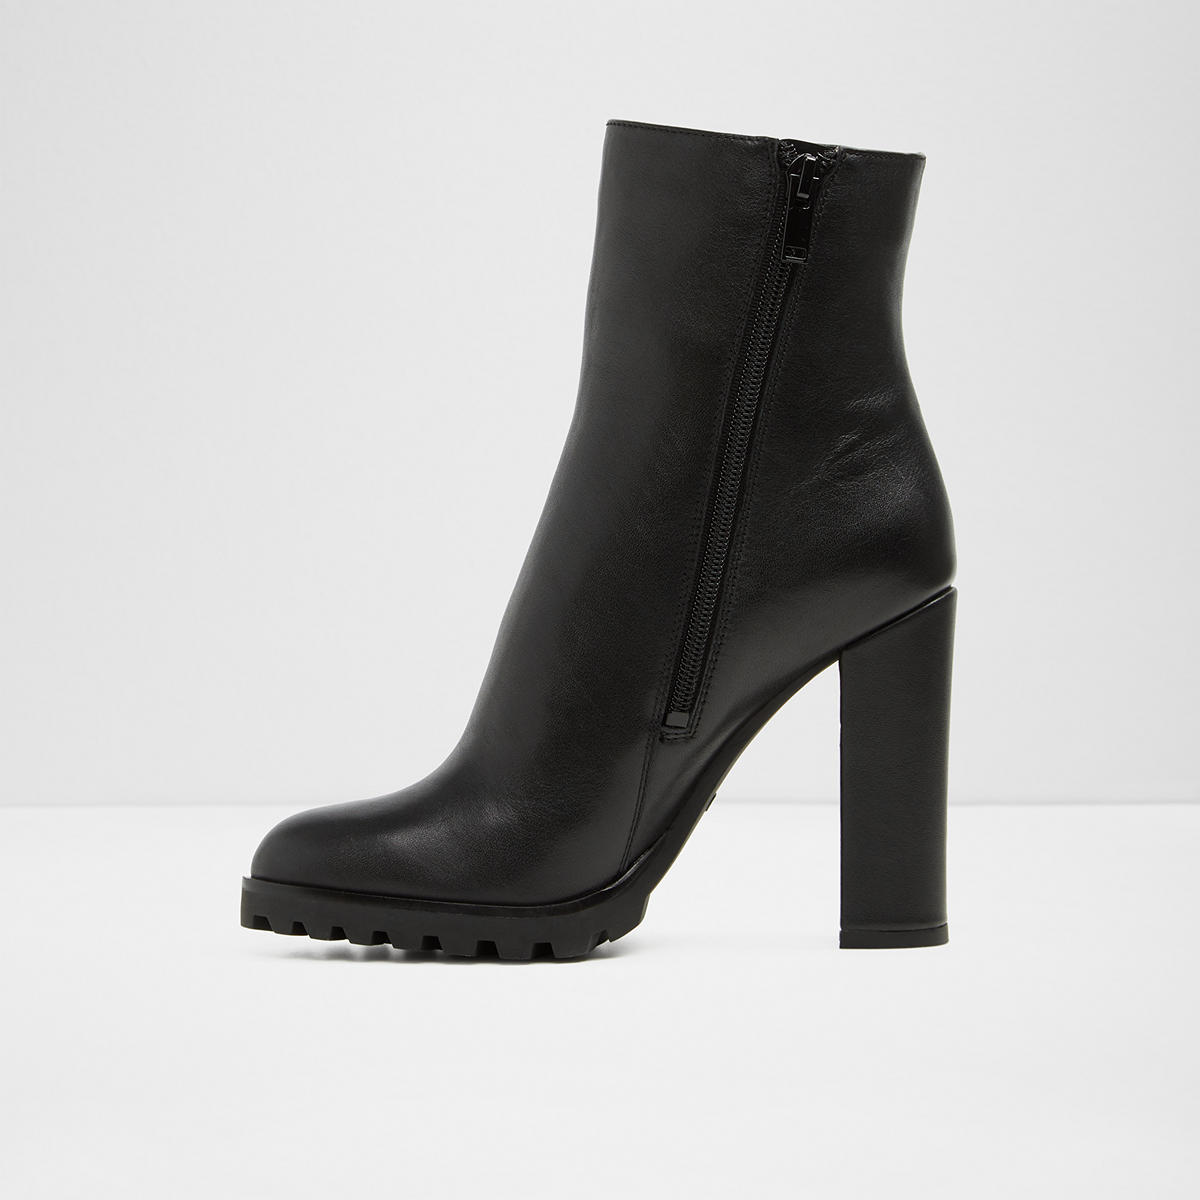 Tealith Black Women's Ankle boots | ALDO UK